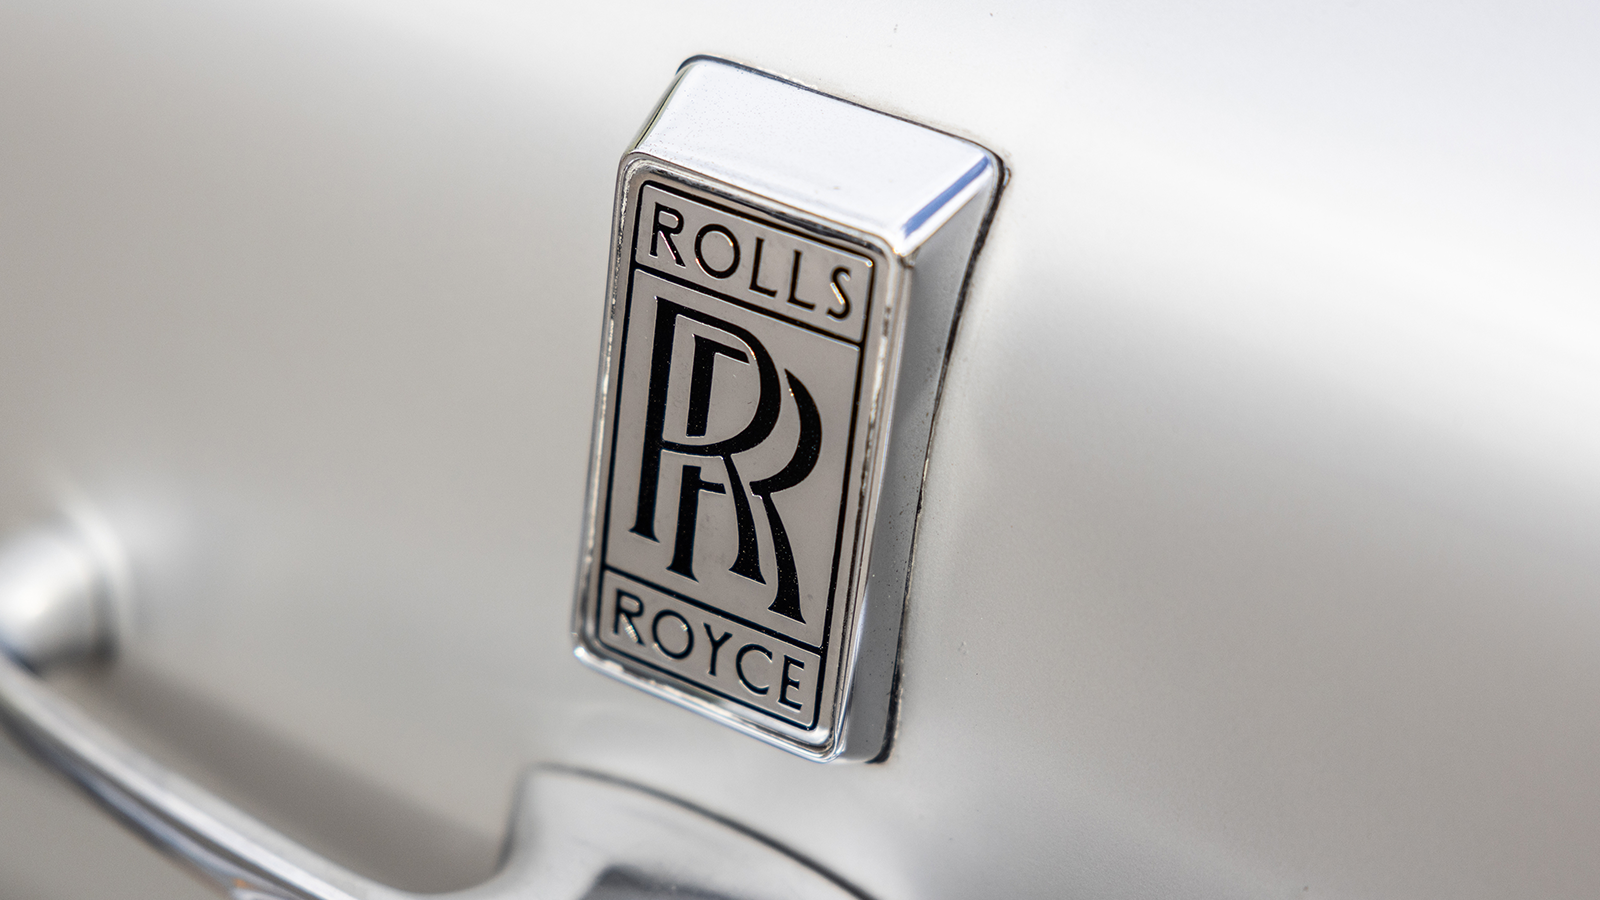 Freddie Mercury’s classic Rolls-Royce is for sale